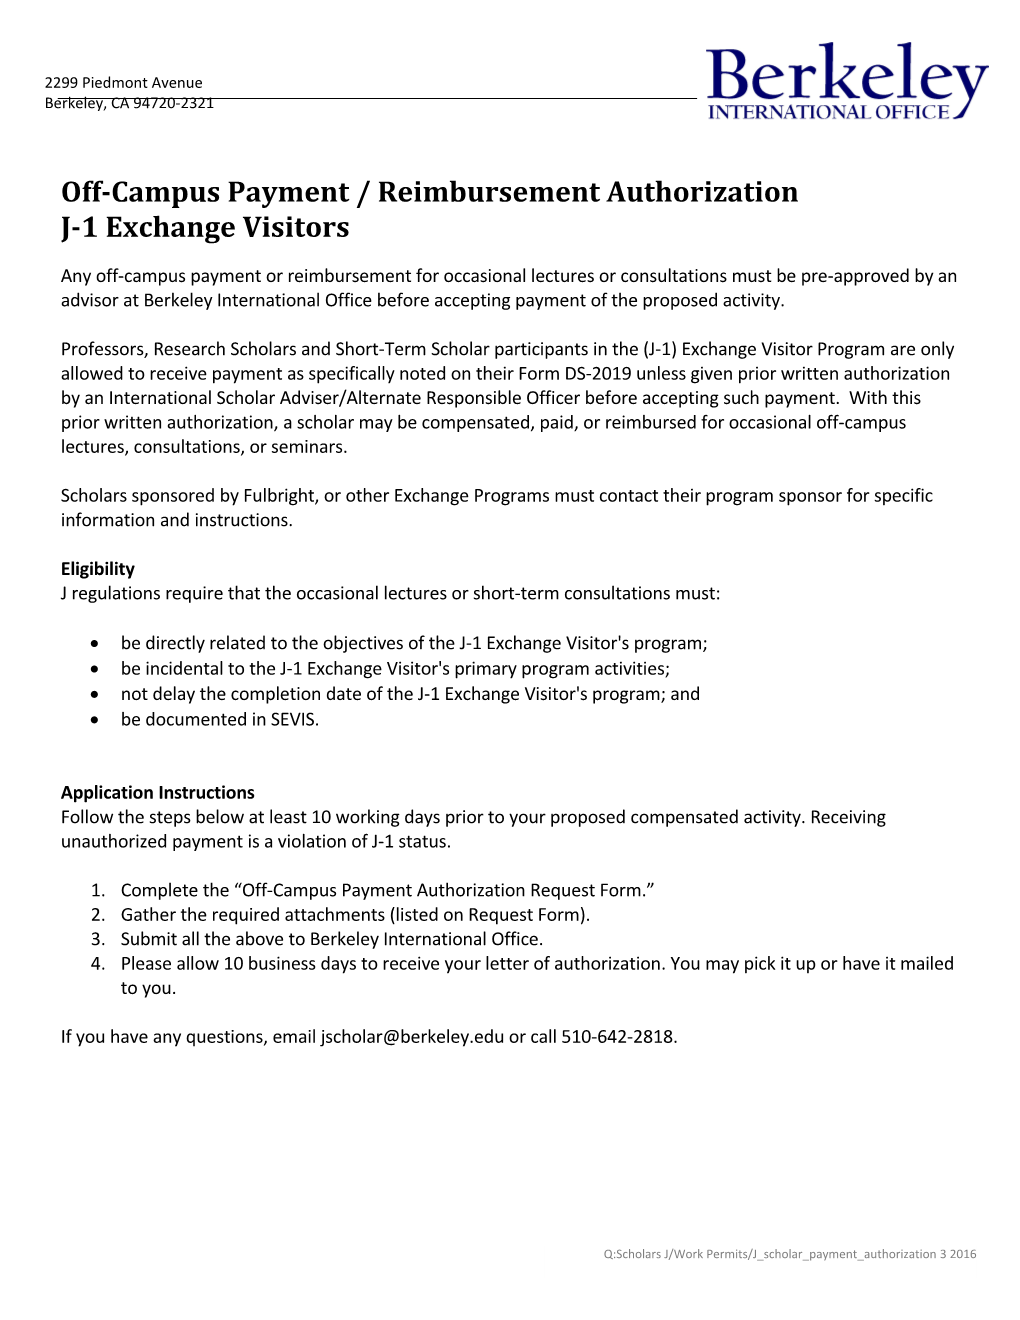 Off-Campus Payment / Reimbursement Authorization